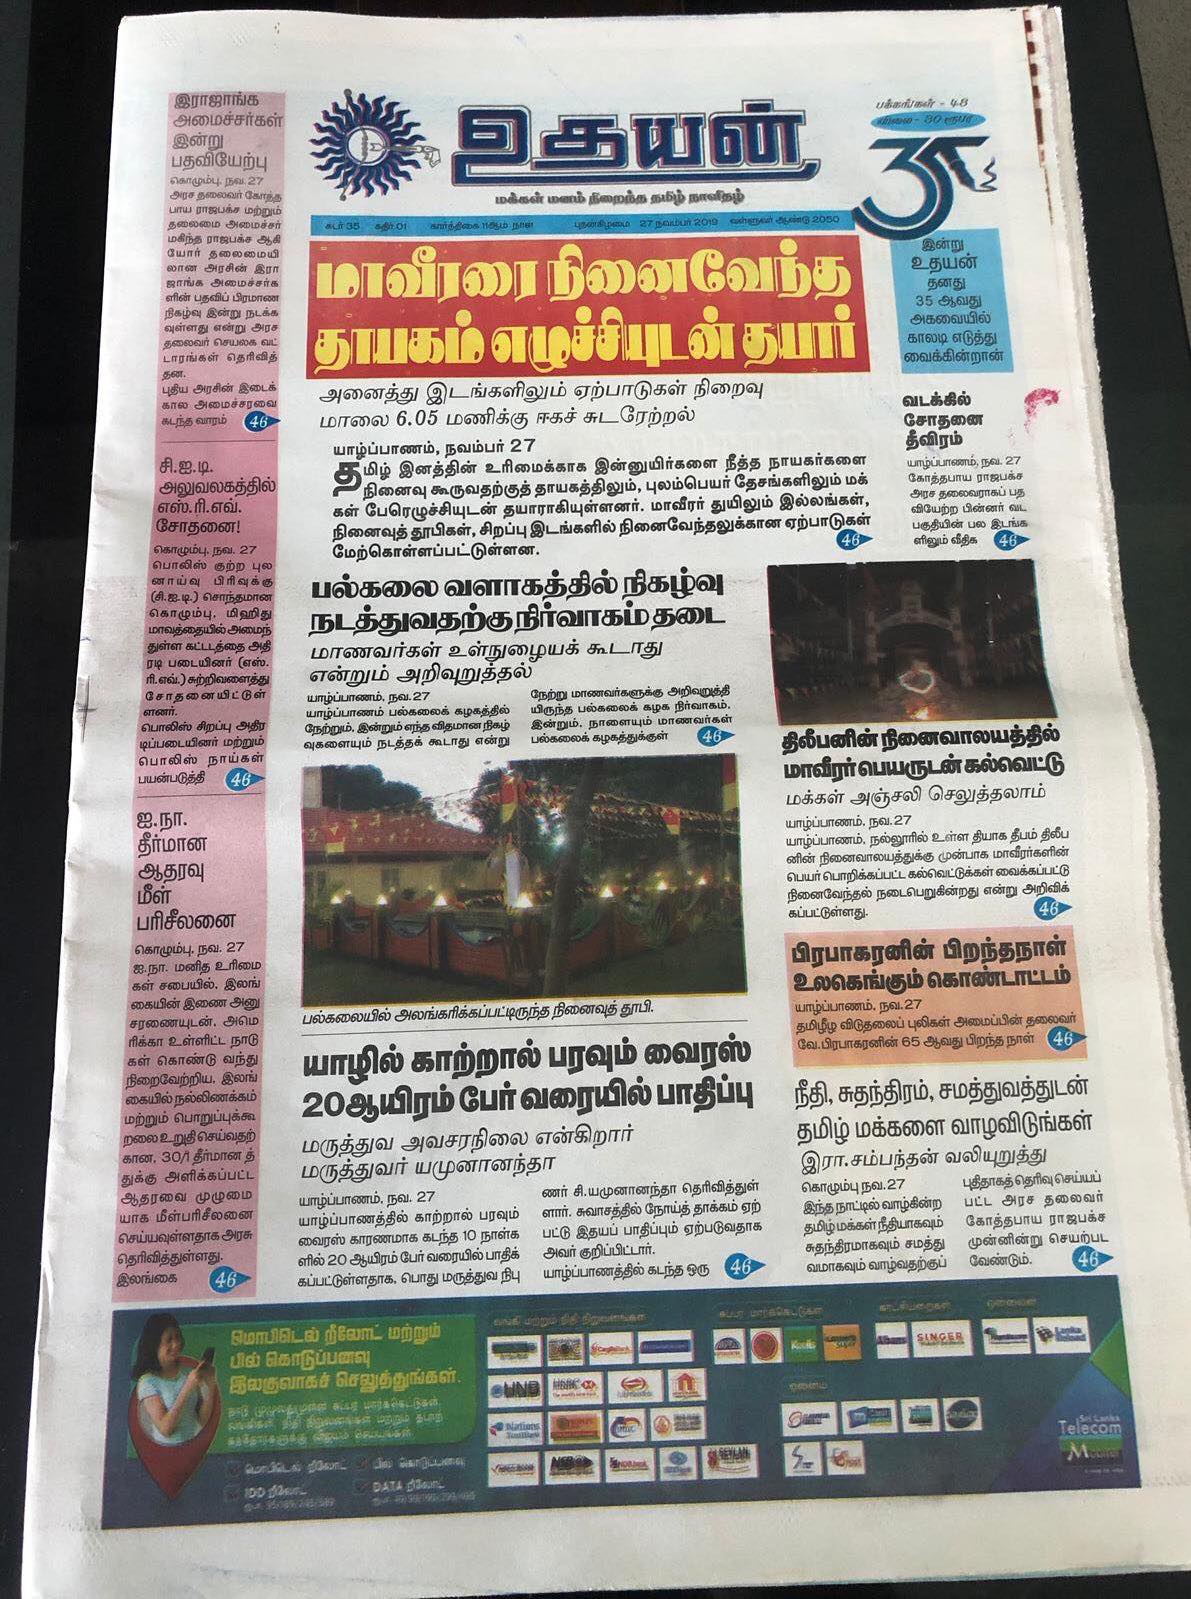 Tamil newspapers across the NorthEast mark Maaveerar Naal Tamil Guardian